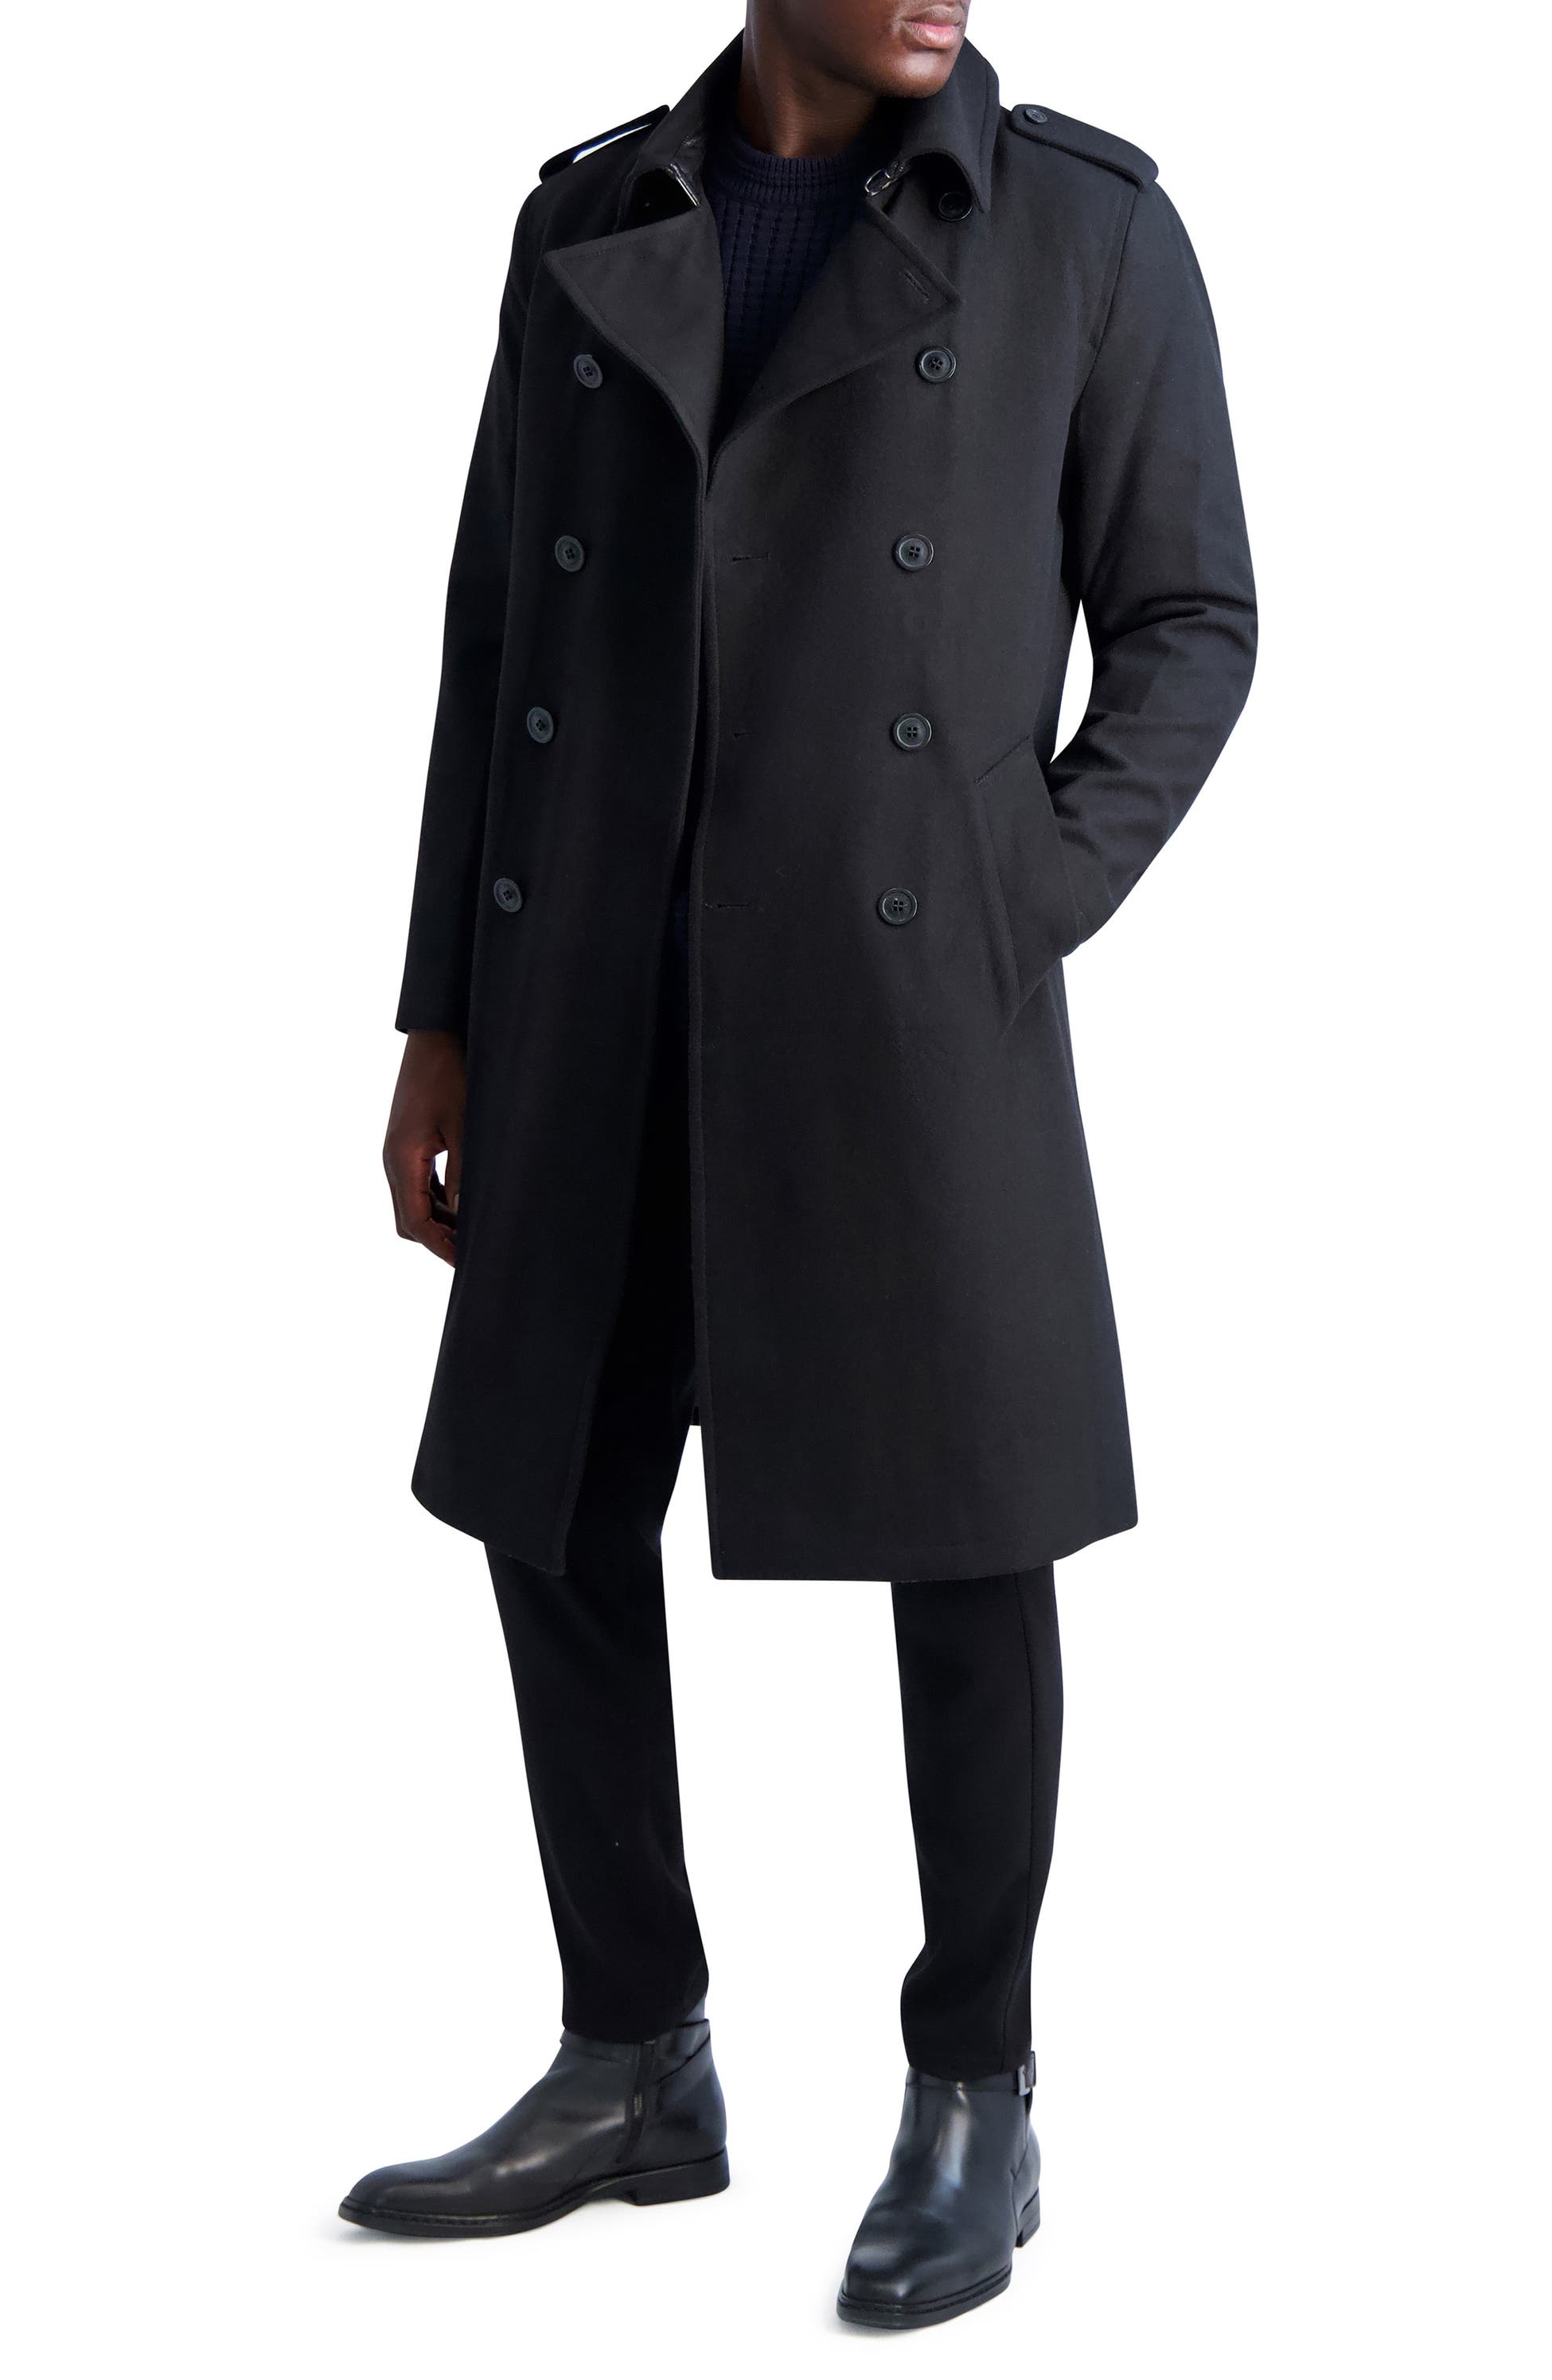 KARL LAGERFELD PARIS Trench Coat, Main, color, BLACK